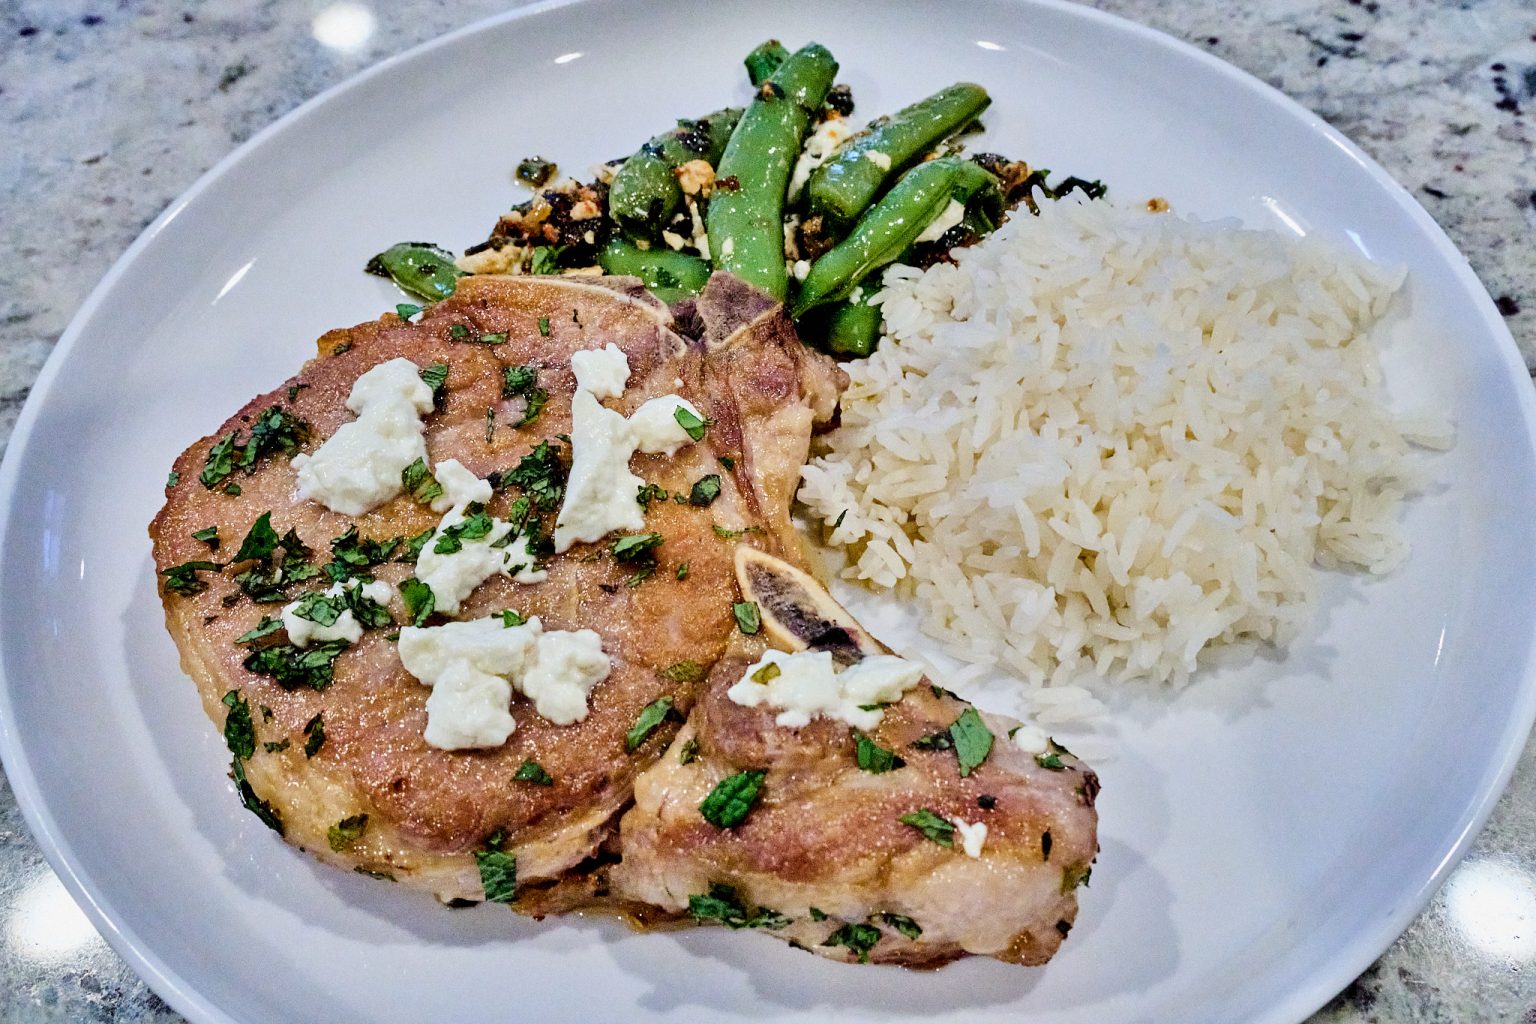 Kane’s Cuisine: Pork chops with feta, snap peas, & mint